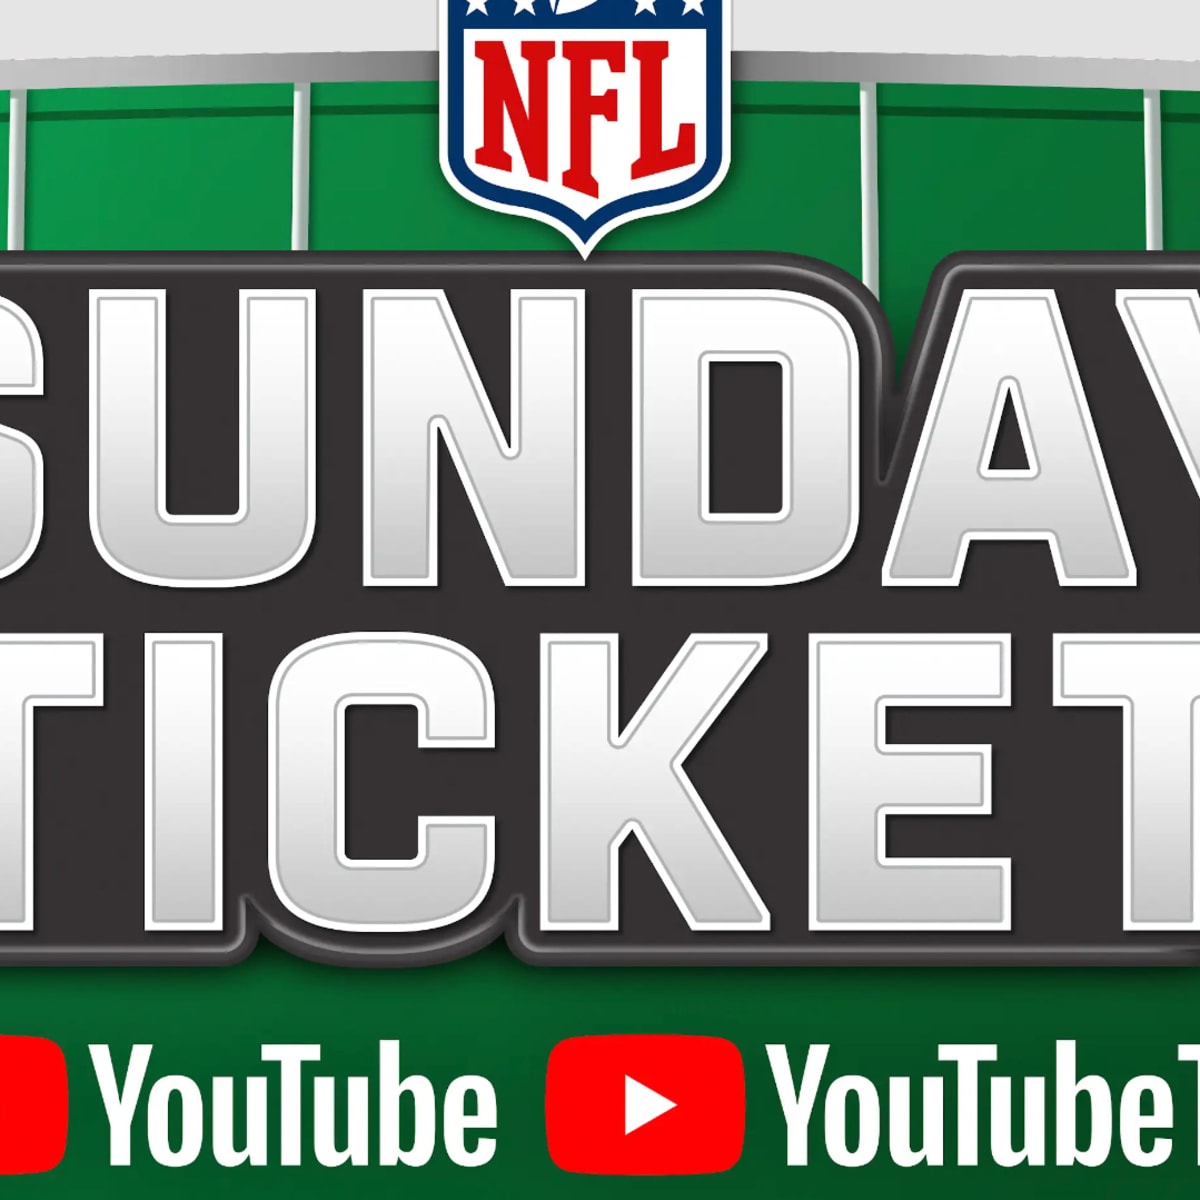 NFL Quietly Taking 'Sunday Ticket' OTT